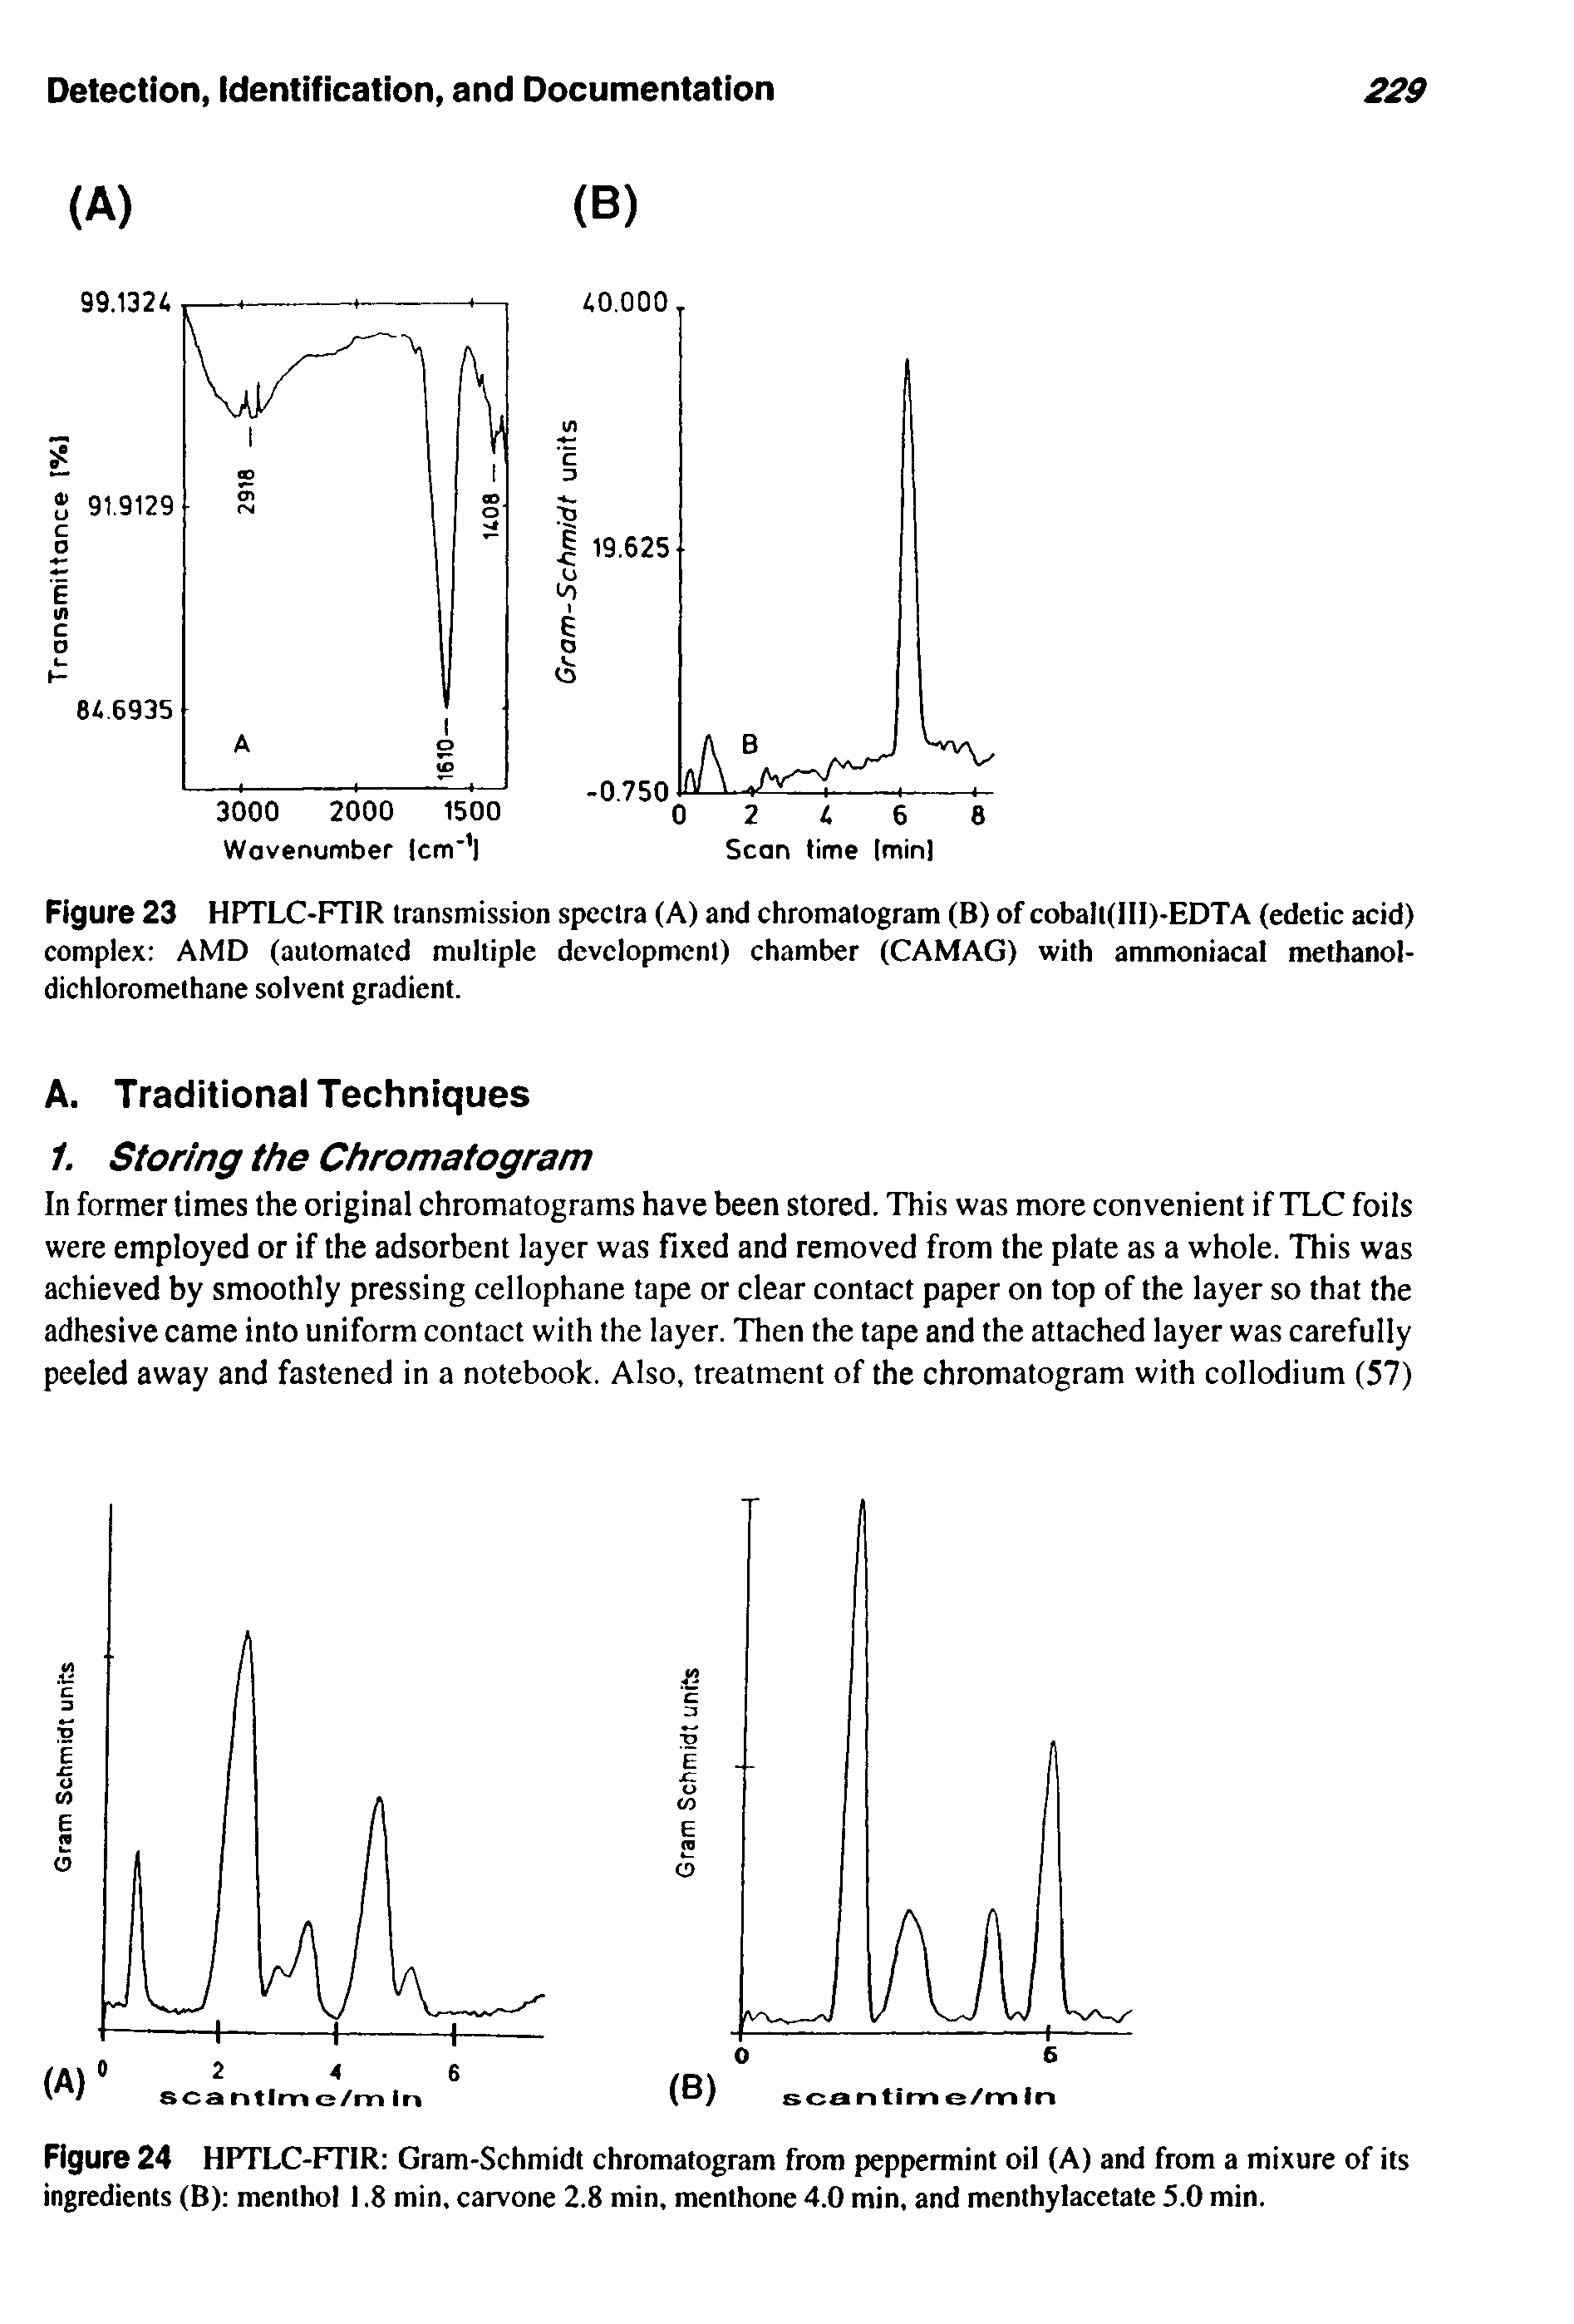 Figure 23 HPTLC-FTIR transmission spectra (A) and chromatogram (B) of cobaIt(III)-EDTA (edetic acid) complex AMD (automated multiple development) chamber (CAMAG) with ammontacal methanol-dichloromethane solvent gradient.